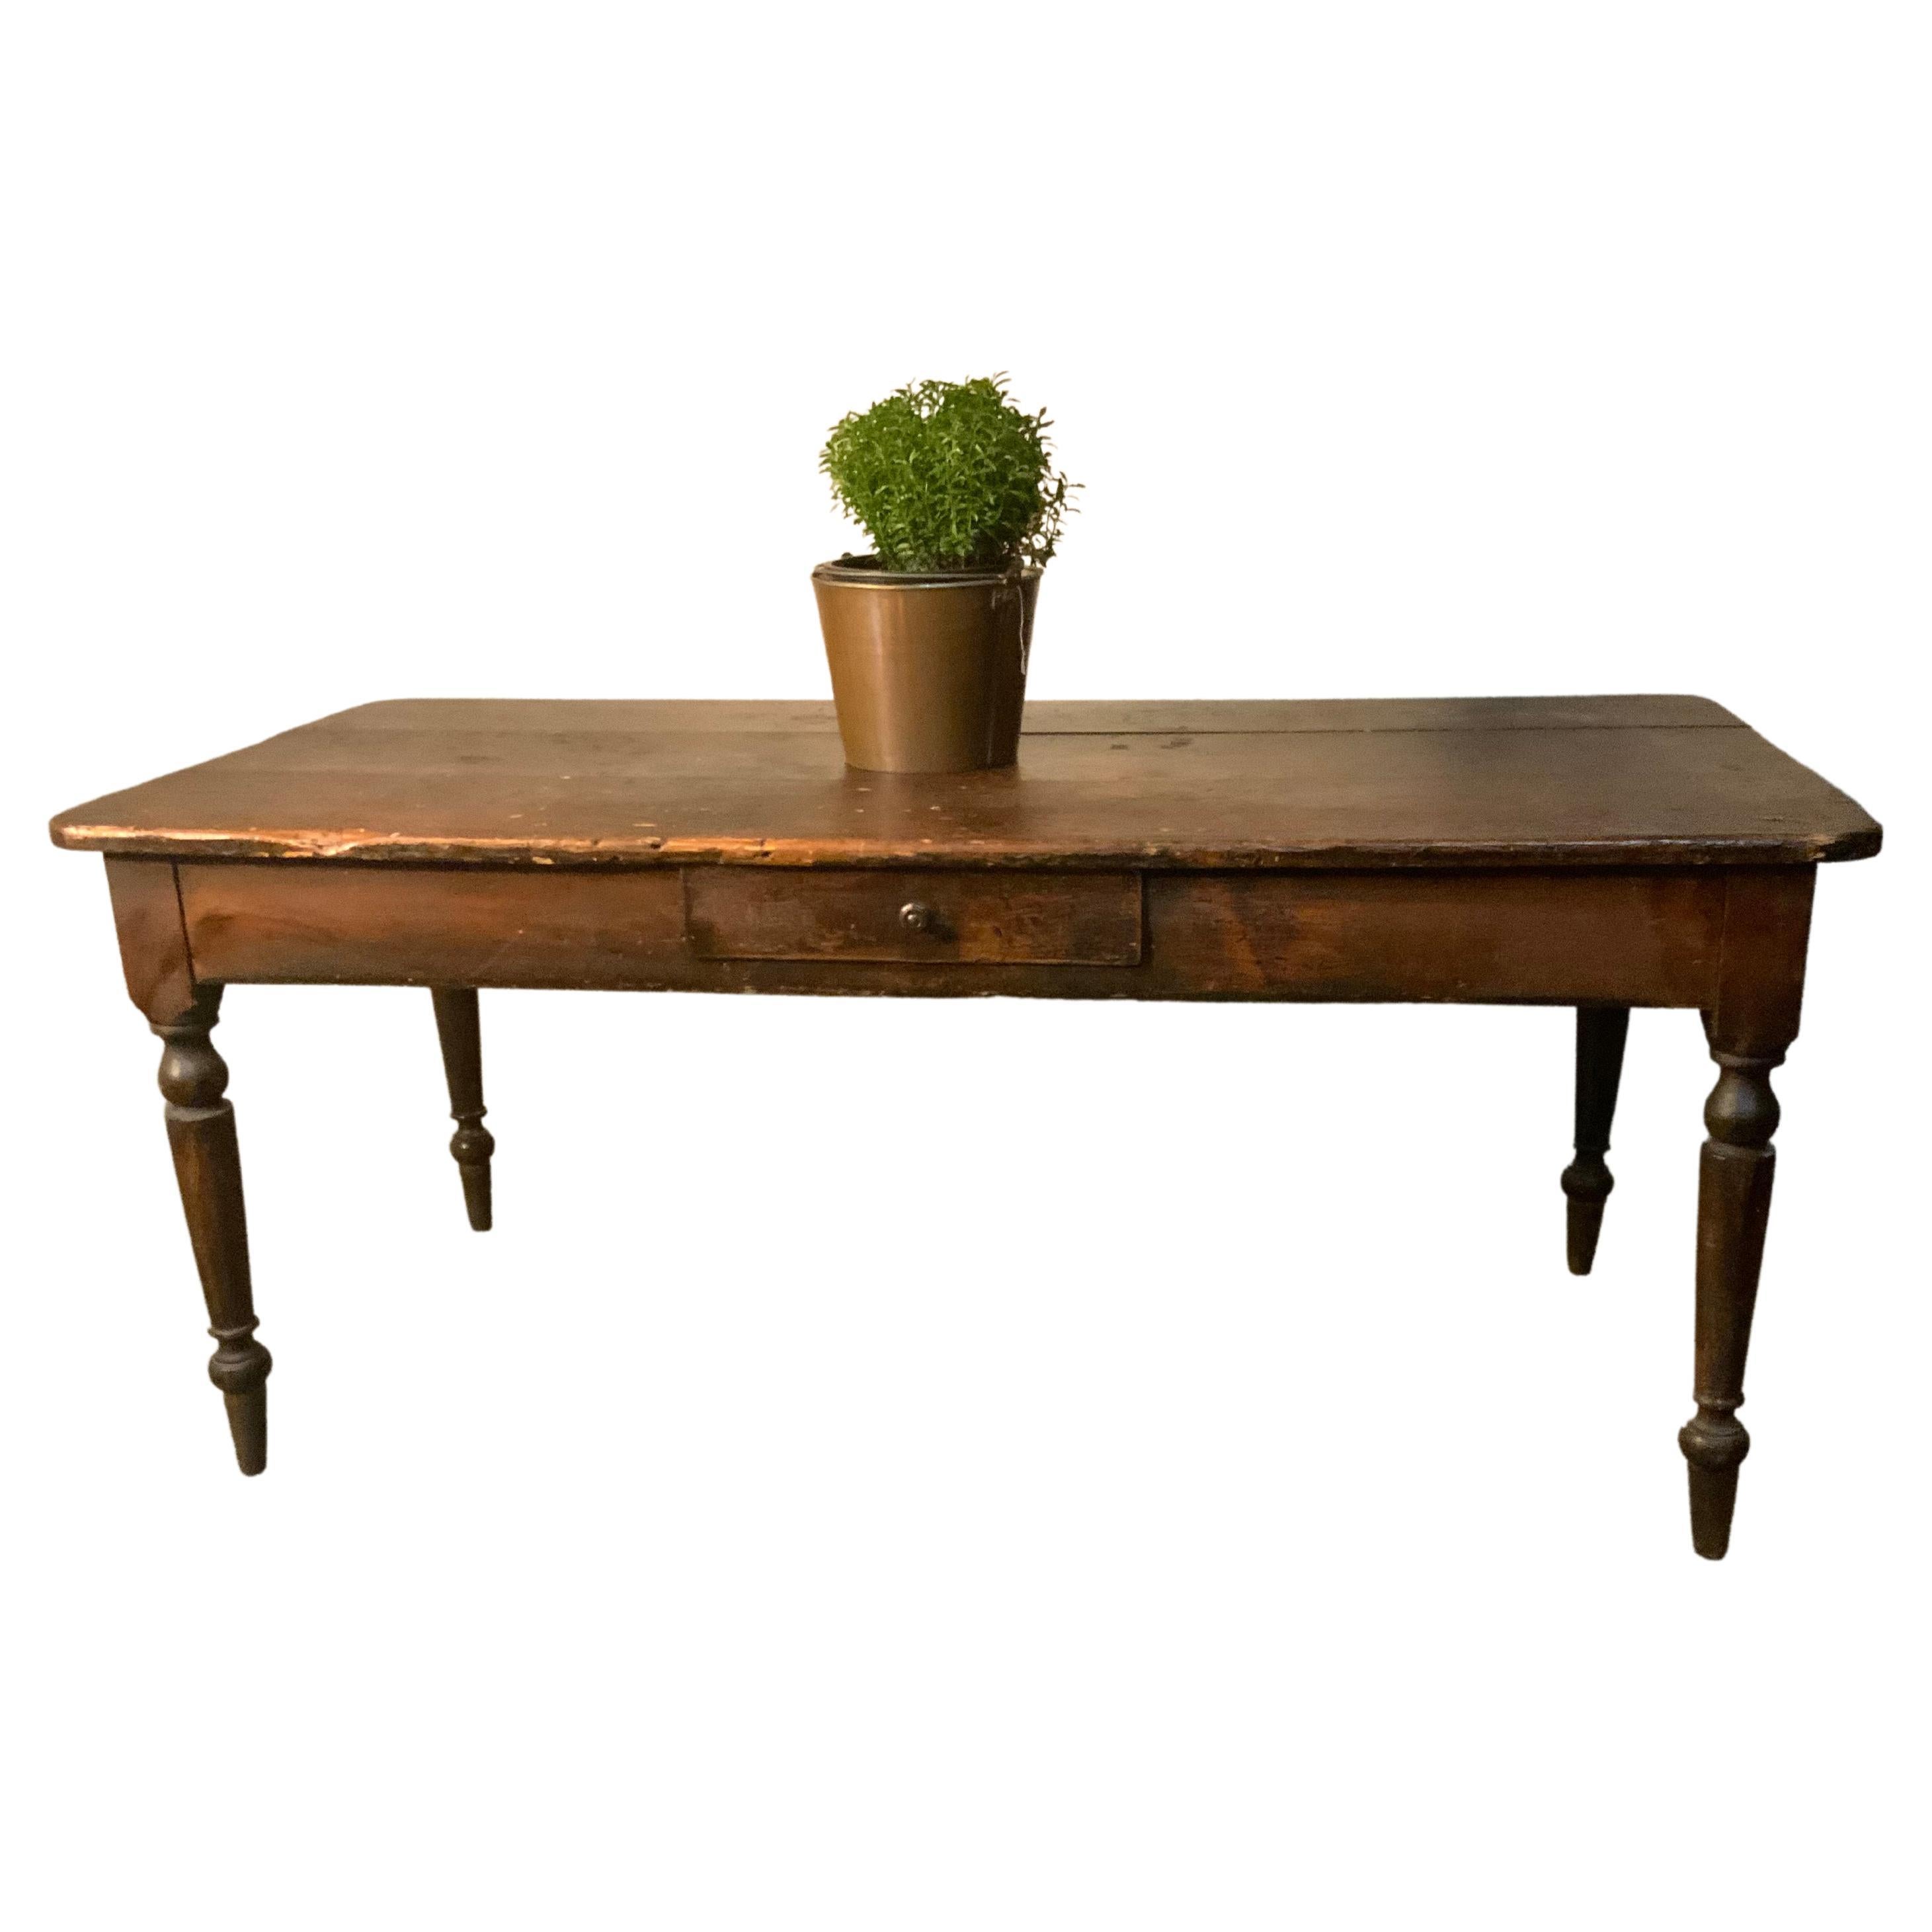 1860 Pine Farm Table in Untouched Original Finish